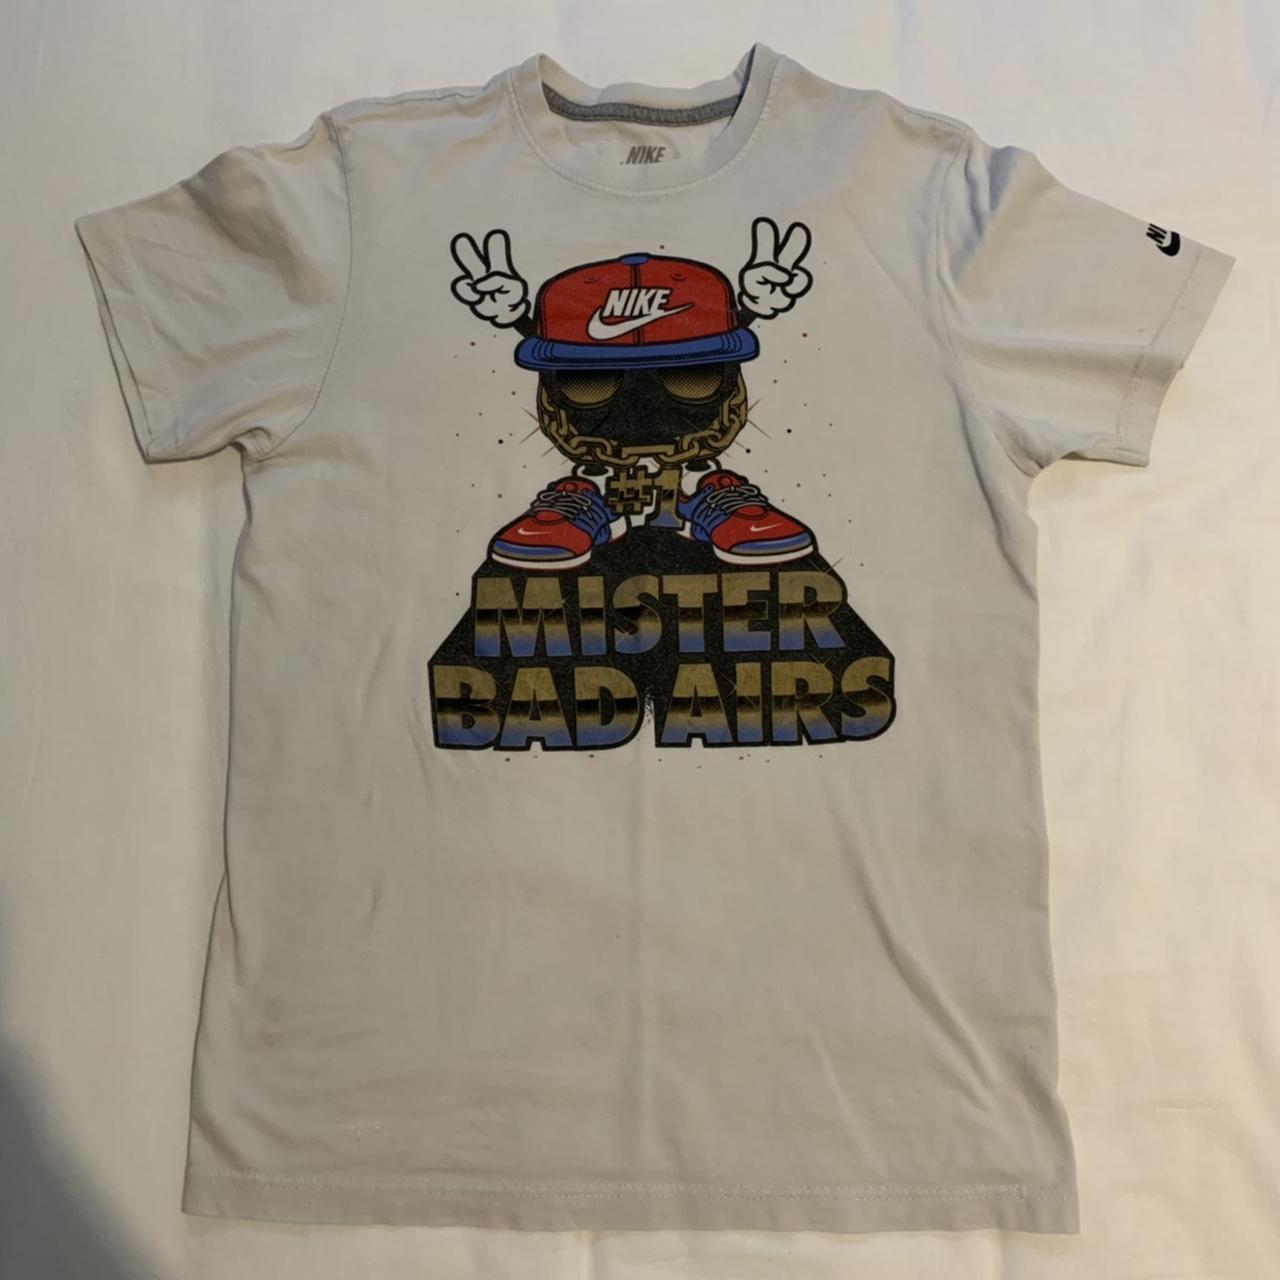 Mr. Bad Airs Does Hip-Hop, T-shirt design for Nike foolocke…